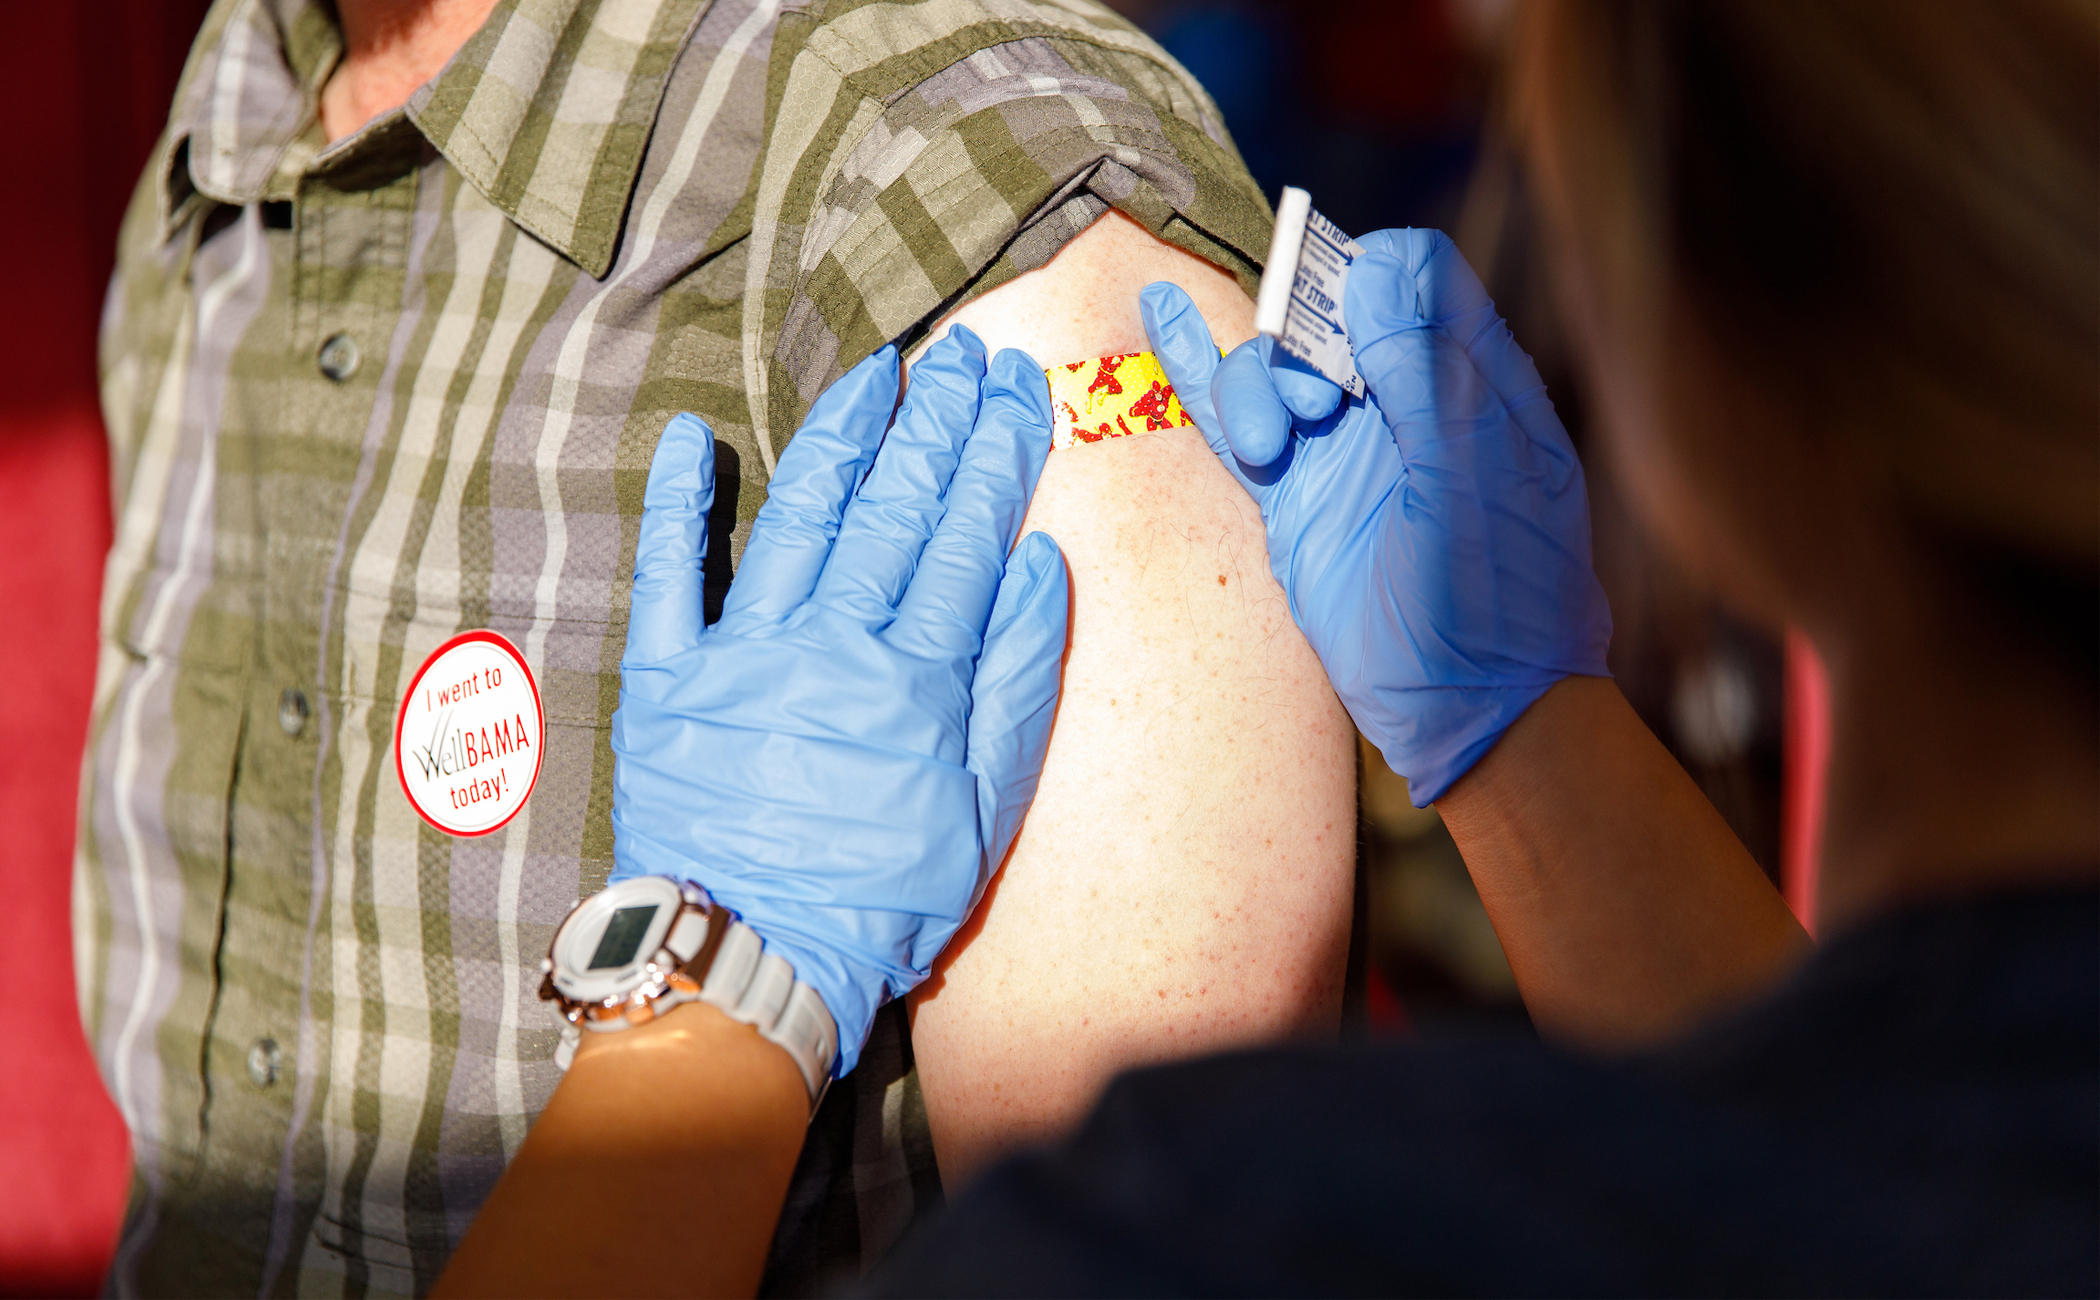 A nurse putting a band aid on a person following a flu shot.